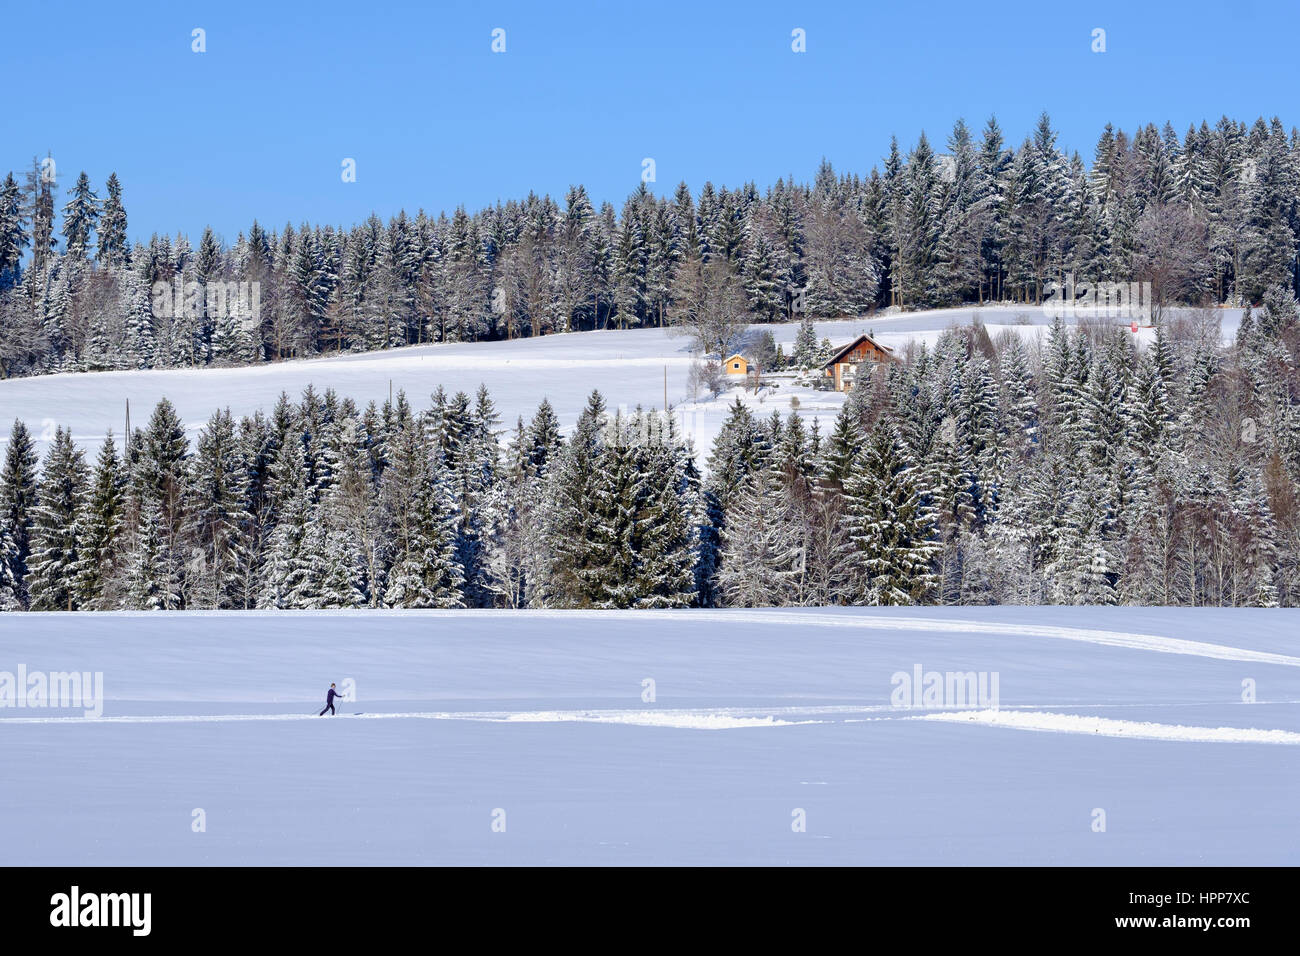 Germany, Maierhoefen, cross-country skier in winter landscape Stock Photo